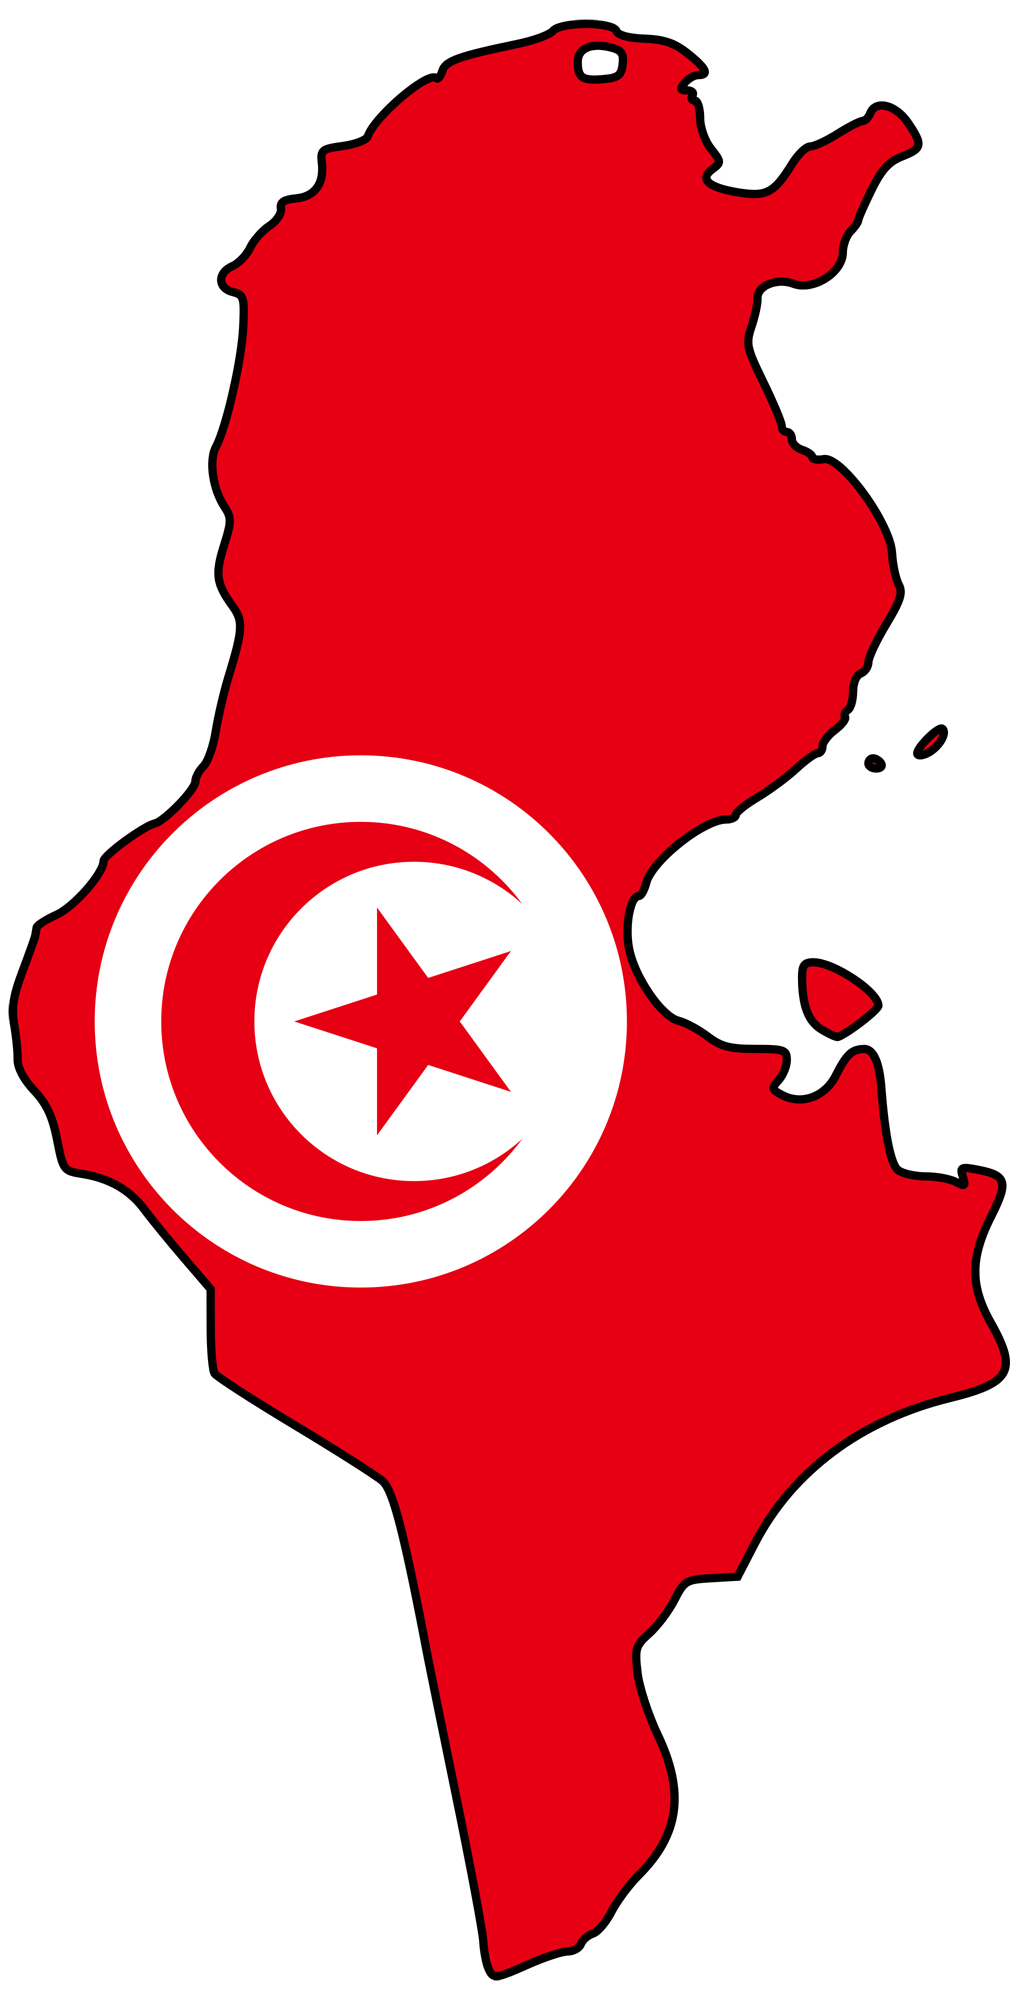 POURQUOI LA TUNISIE?